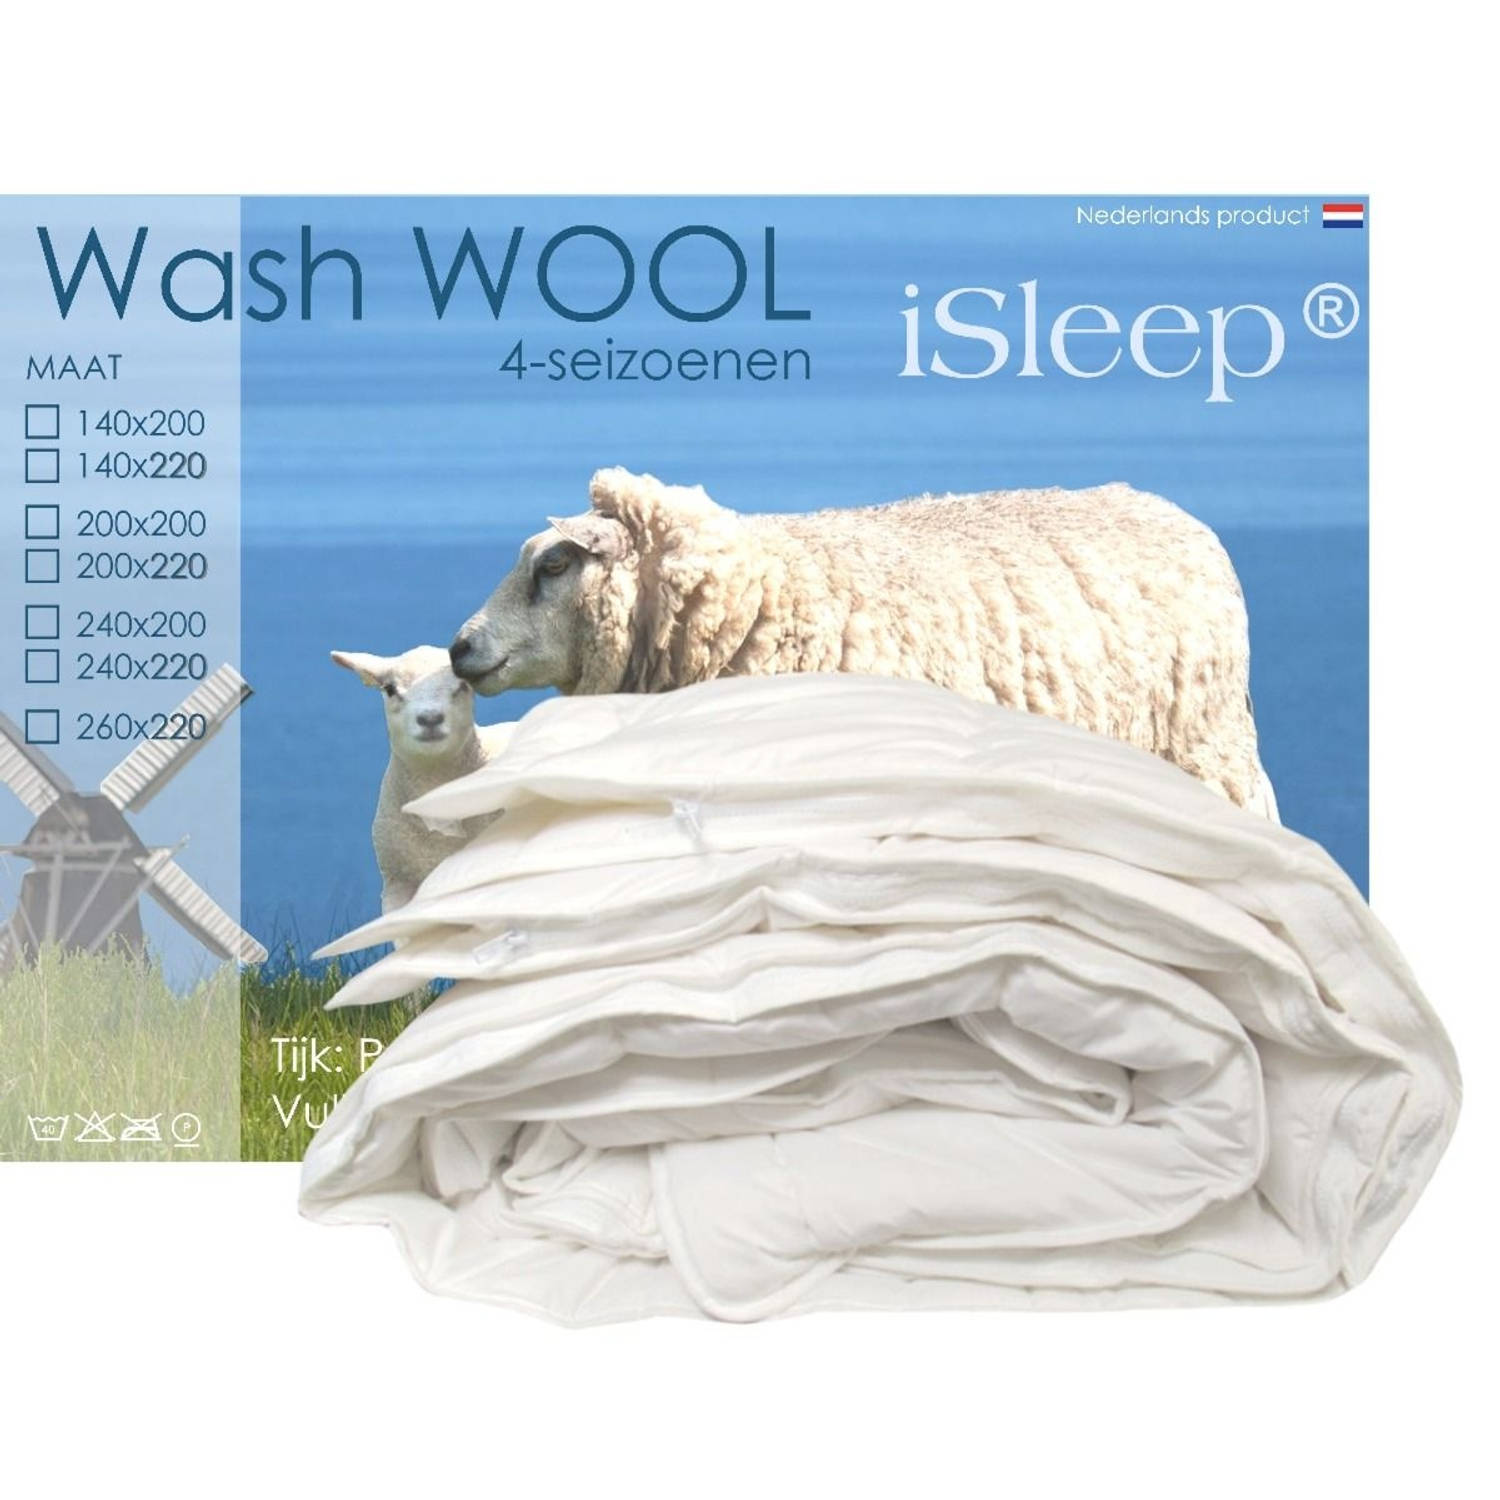 iSleep Wash Wool wollen 4-seizoenen dekbed wasbare wol 1-Persoons 140x200 cm